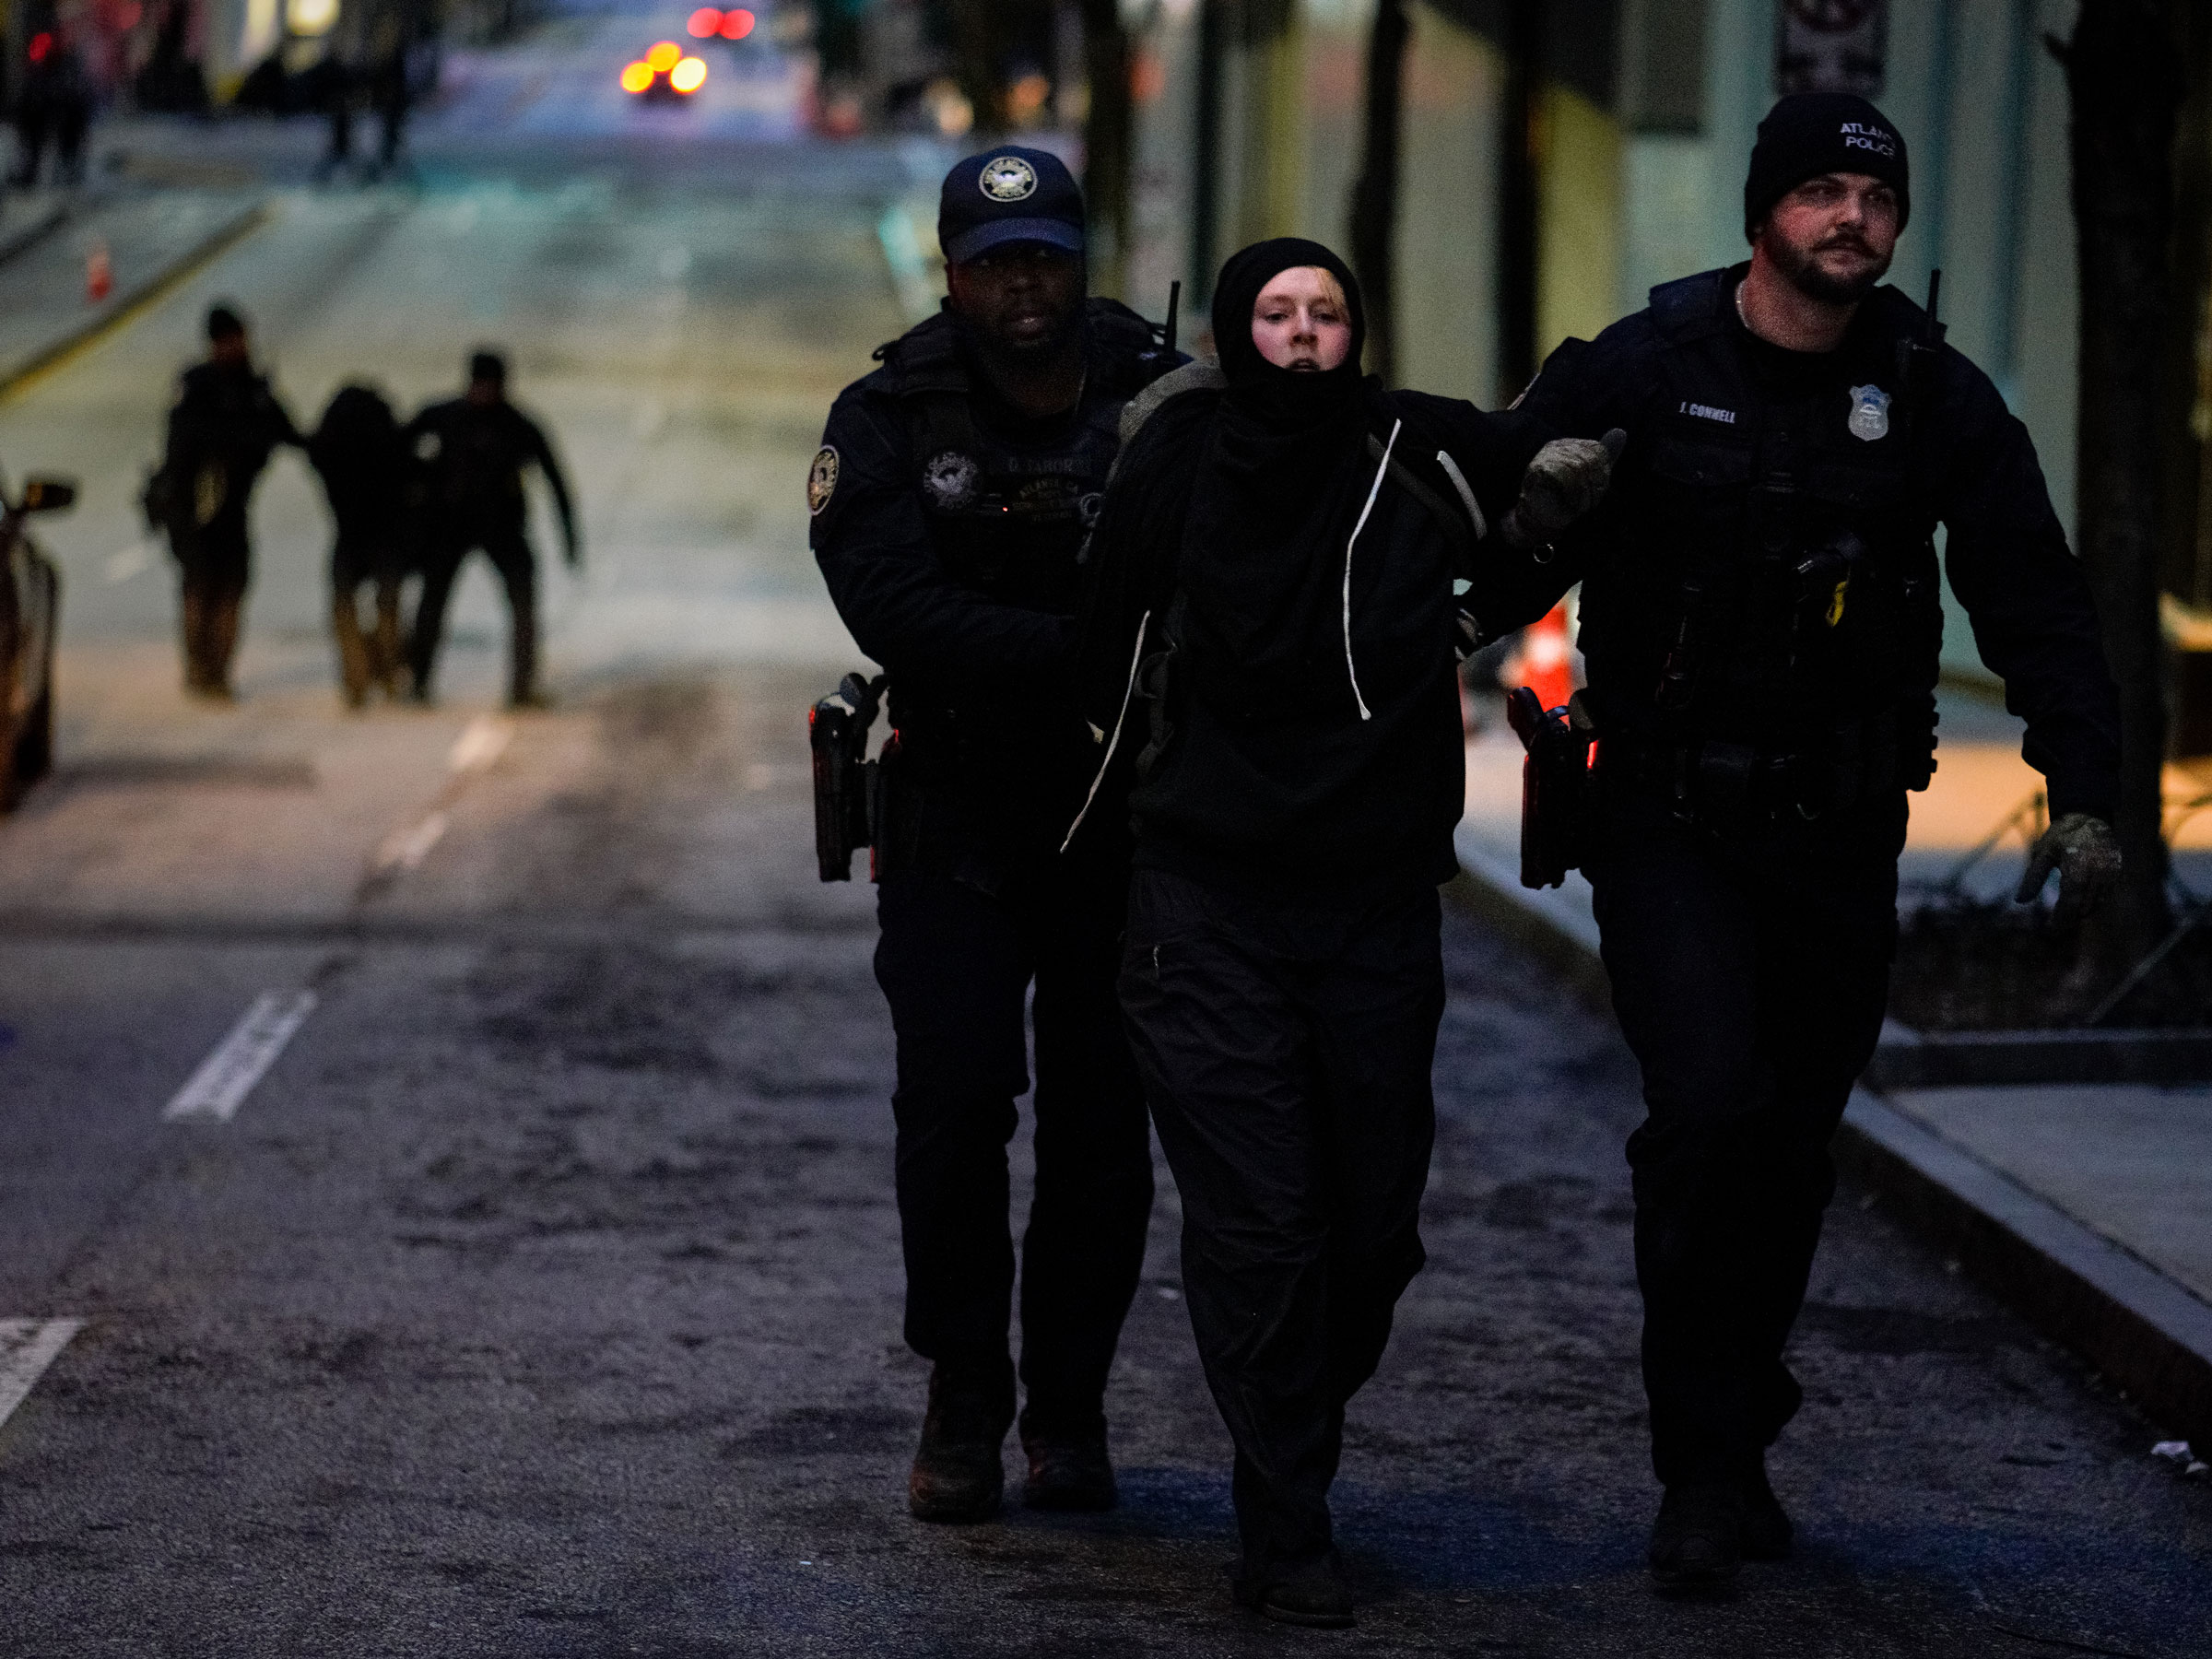 Police arrest a protestor during a “Stop Cop City” protest in Atlanta, Ga., on Jan. 21, 2023. (Benjamin Hendren—Anadolu Agency/Getty Images)